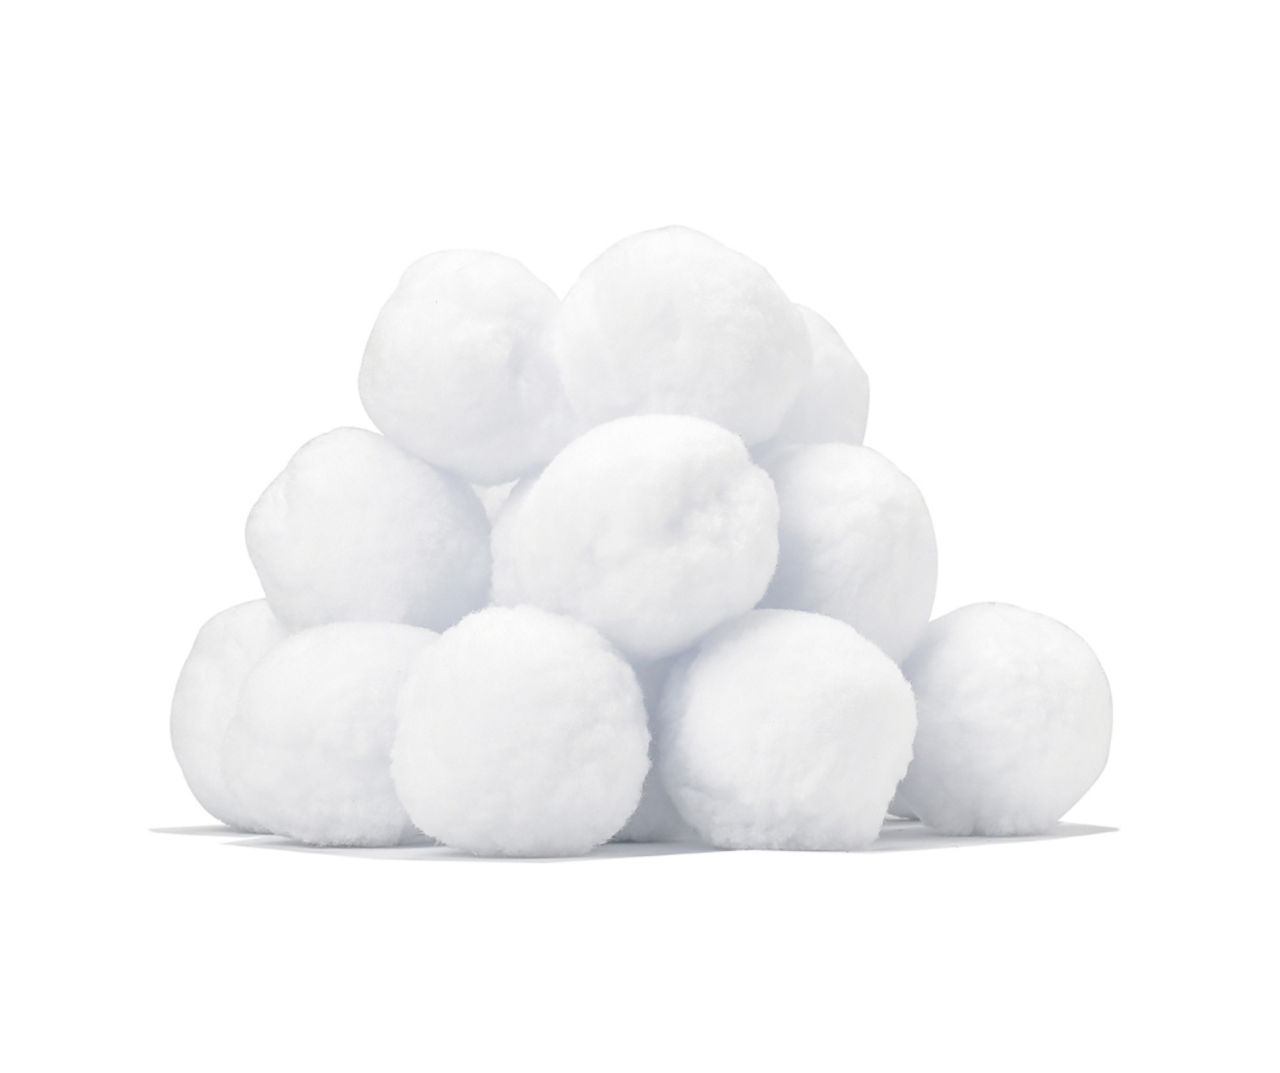 indoor snowball kit – Pearhead